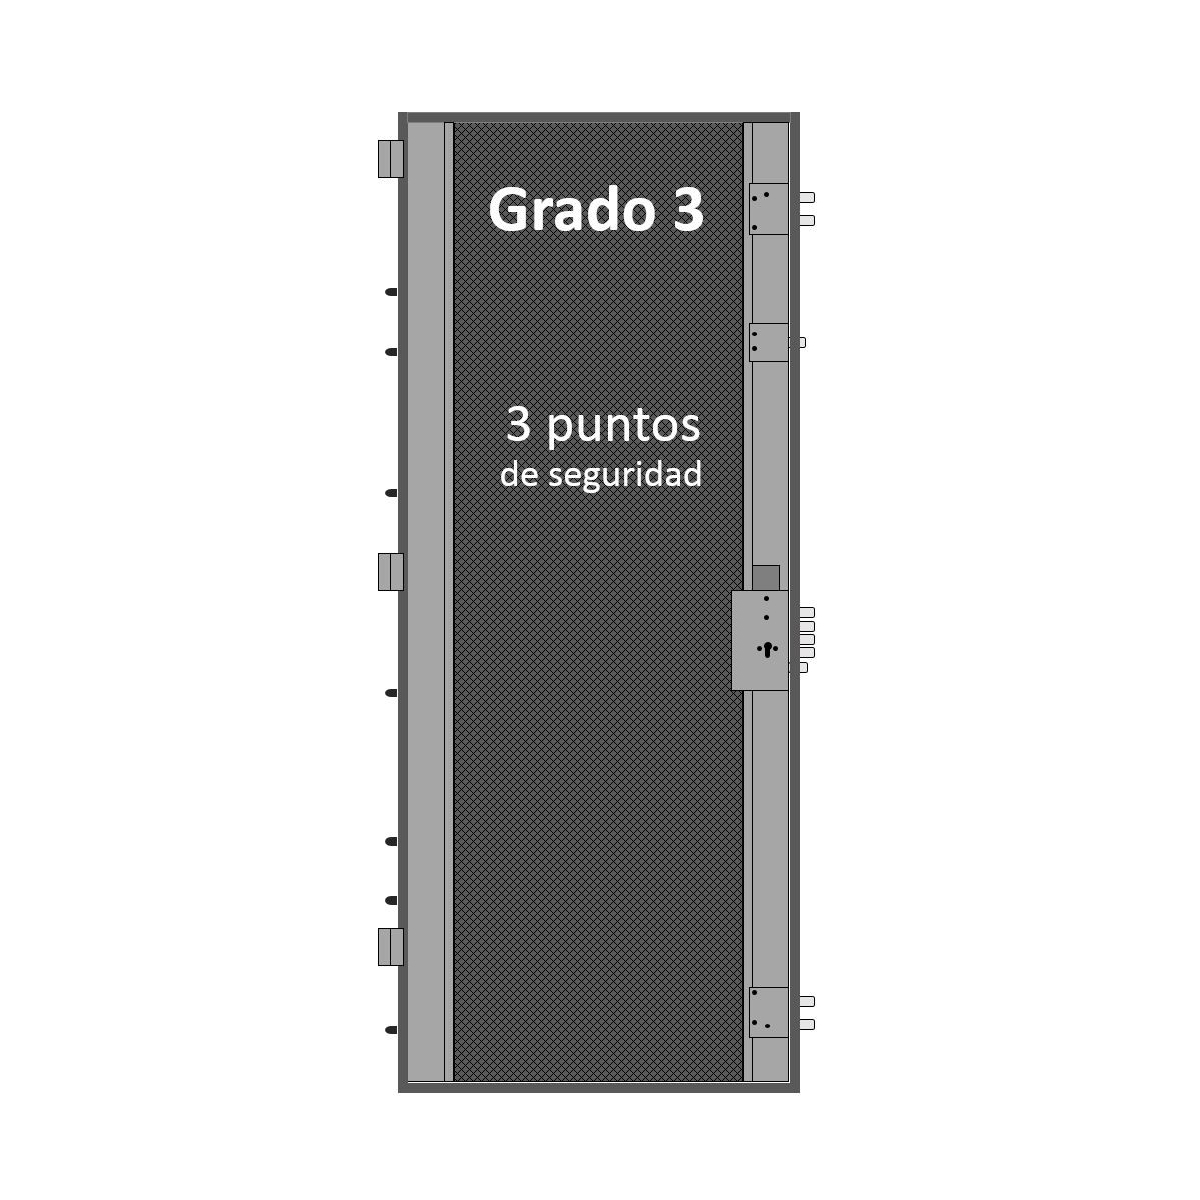 Puertas acorazadas Serie Omega Cearco - Puerta Acorazada 100cm grado 3 Arauco Omega